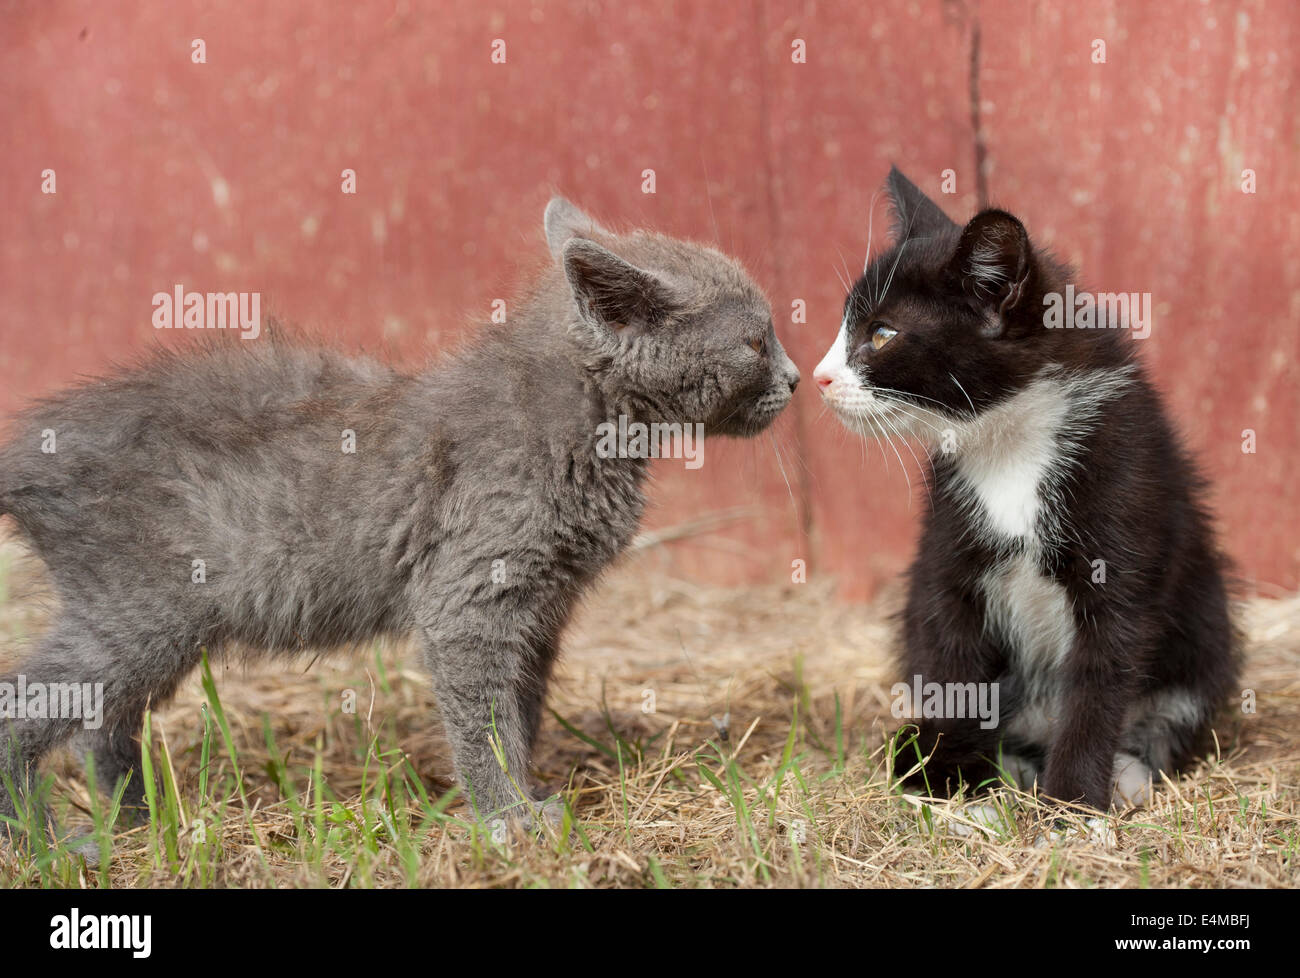 Pair of barn kittens Stock Photo